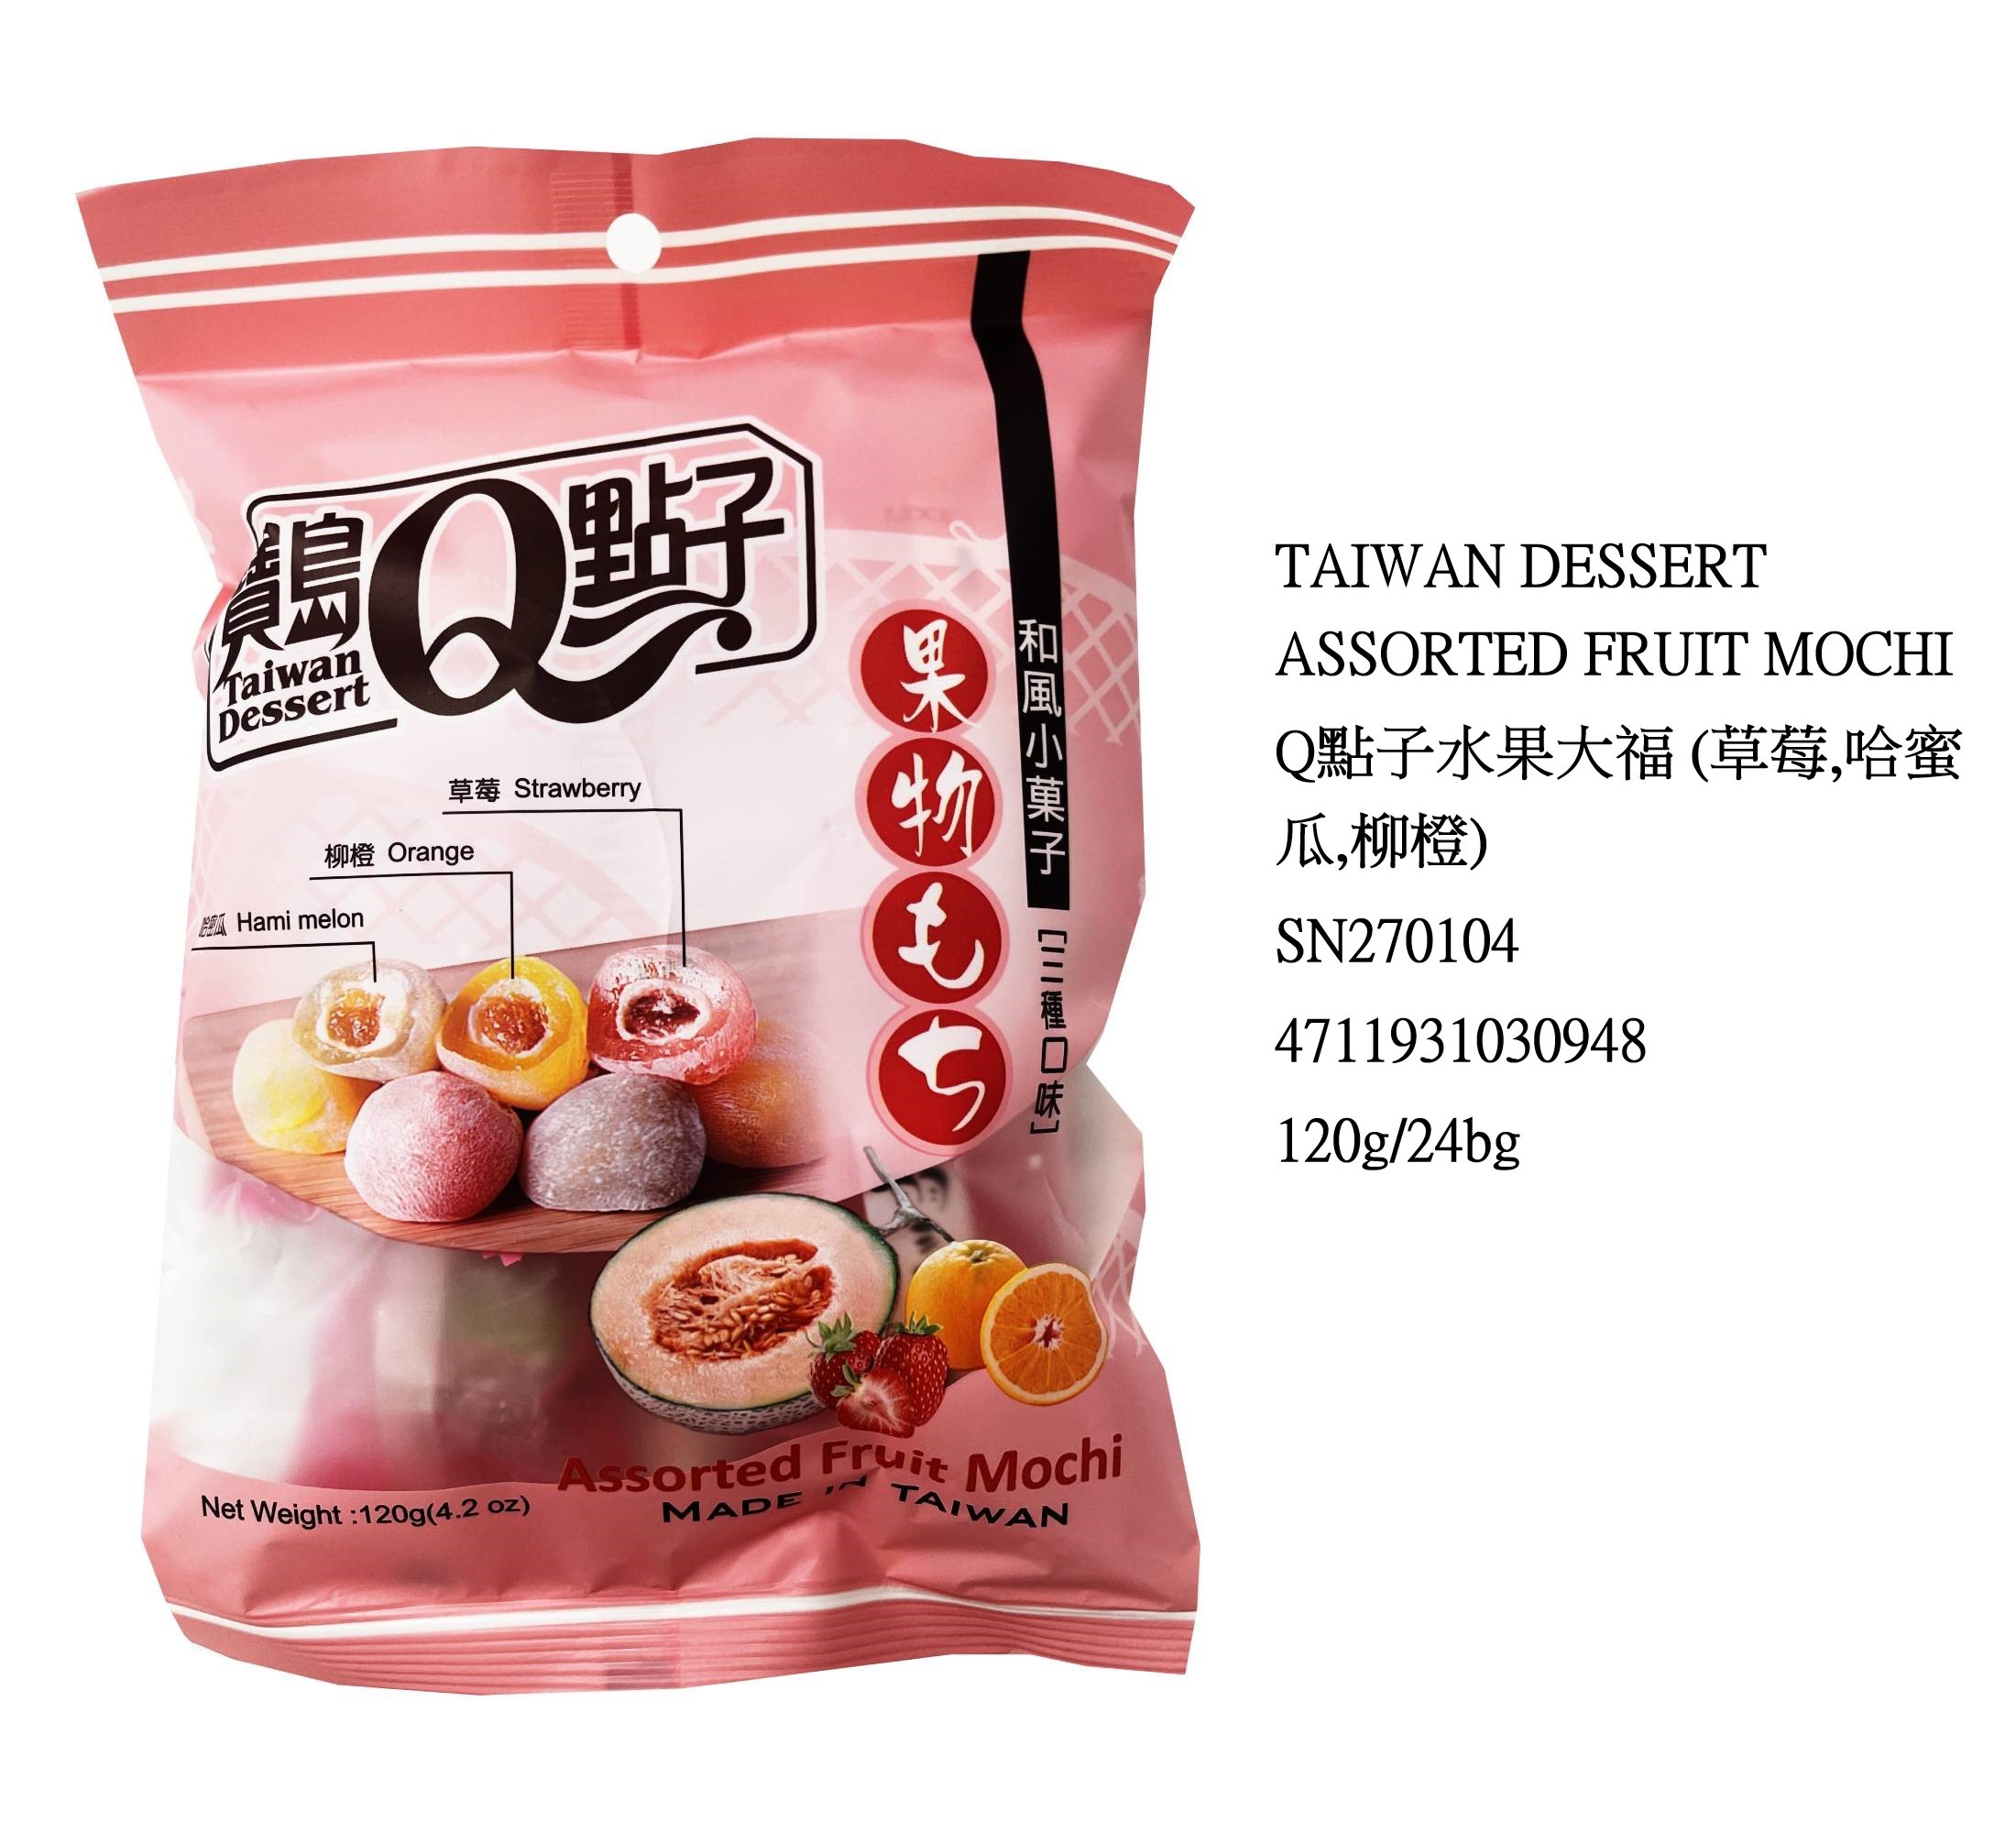 TAIWAN DESSERT ASSORTED FRUIT MOCHI SN270104